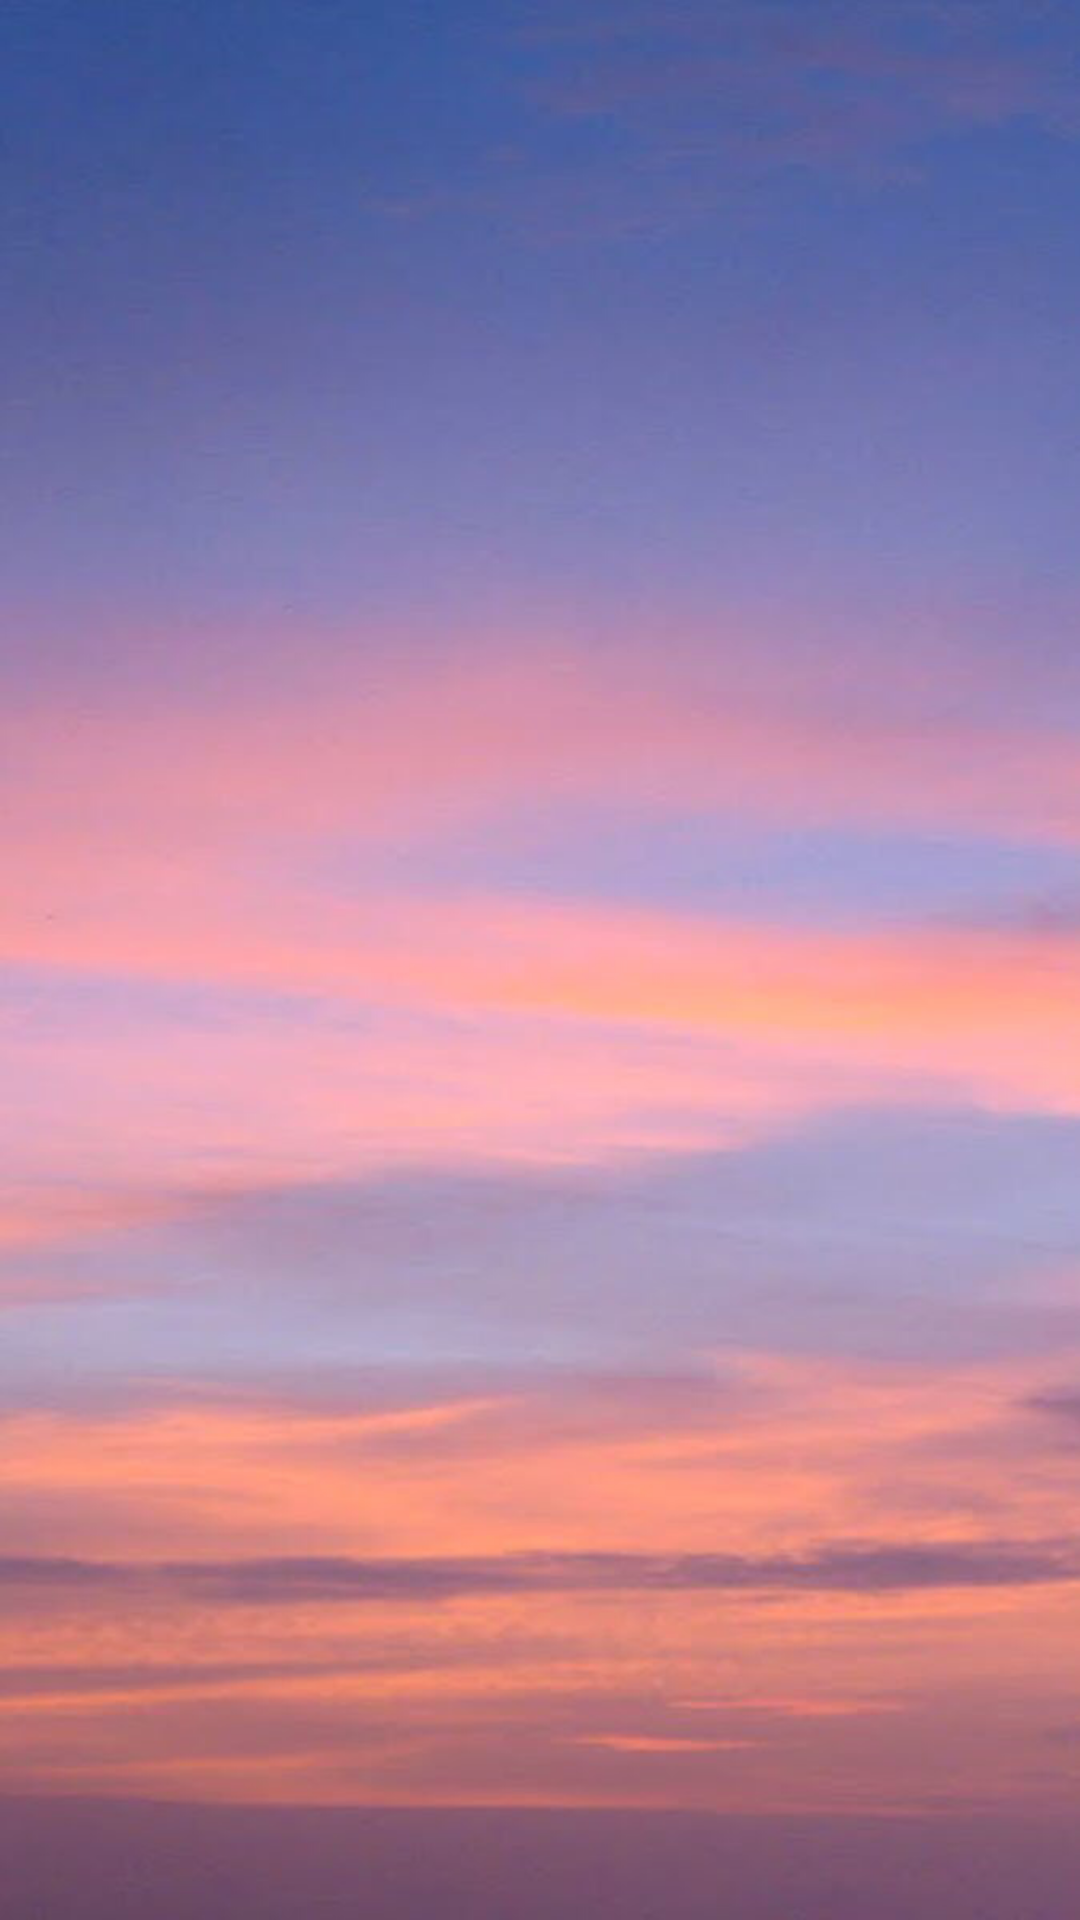 Aesthetic iPhone Wallpaper. Blue sky wallpaper, Pink and purple wallpaper, iPhone wallpaper sky